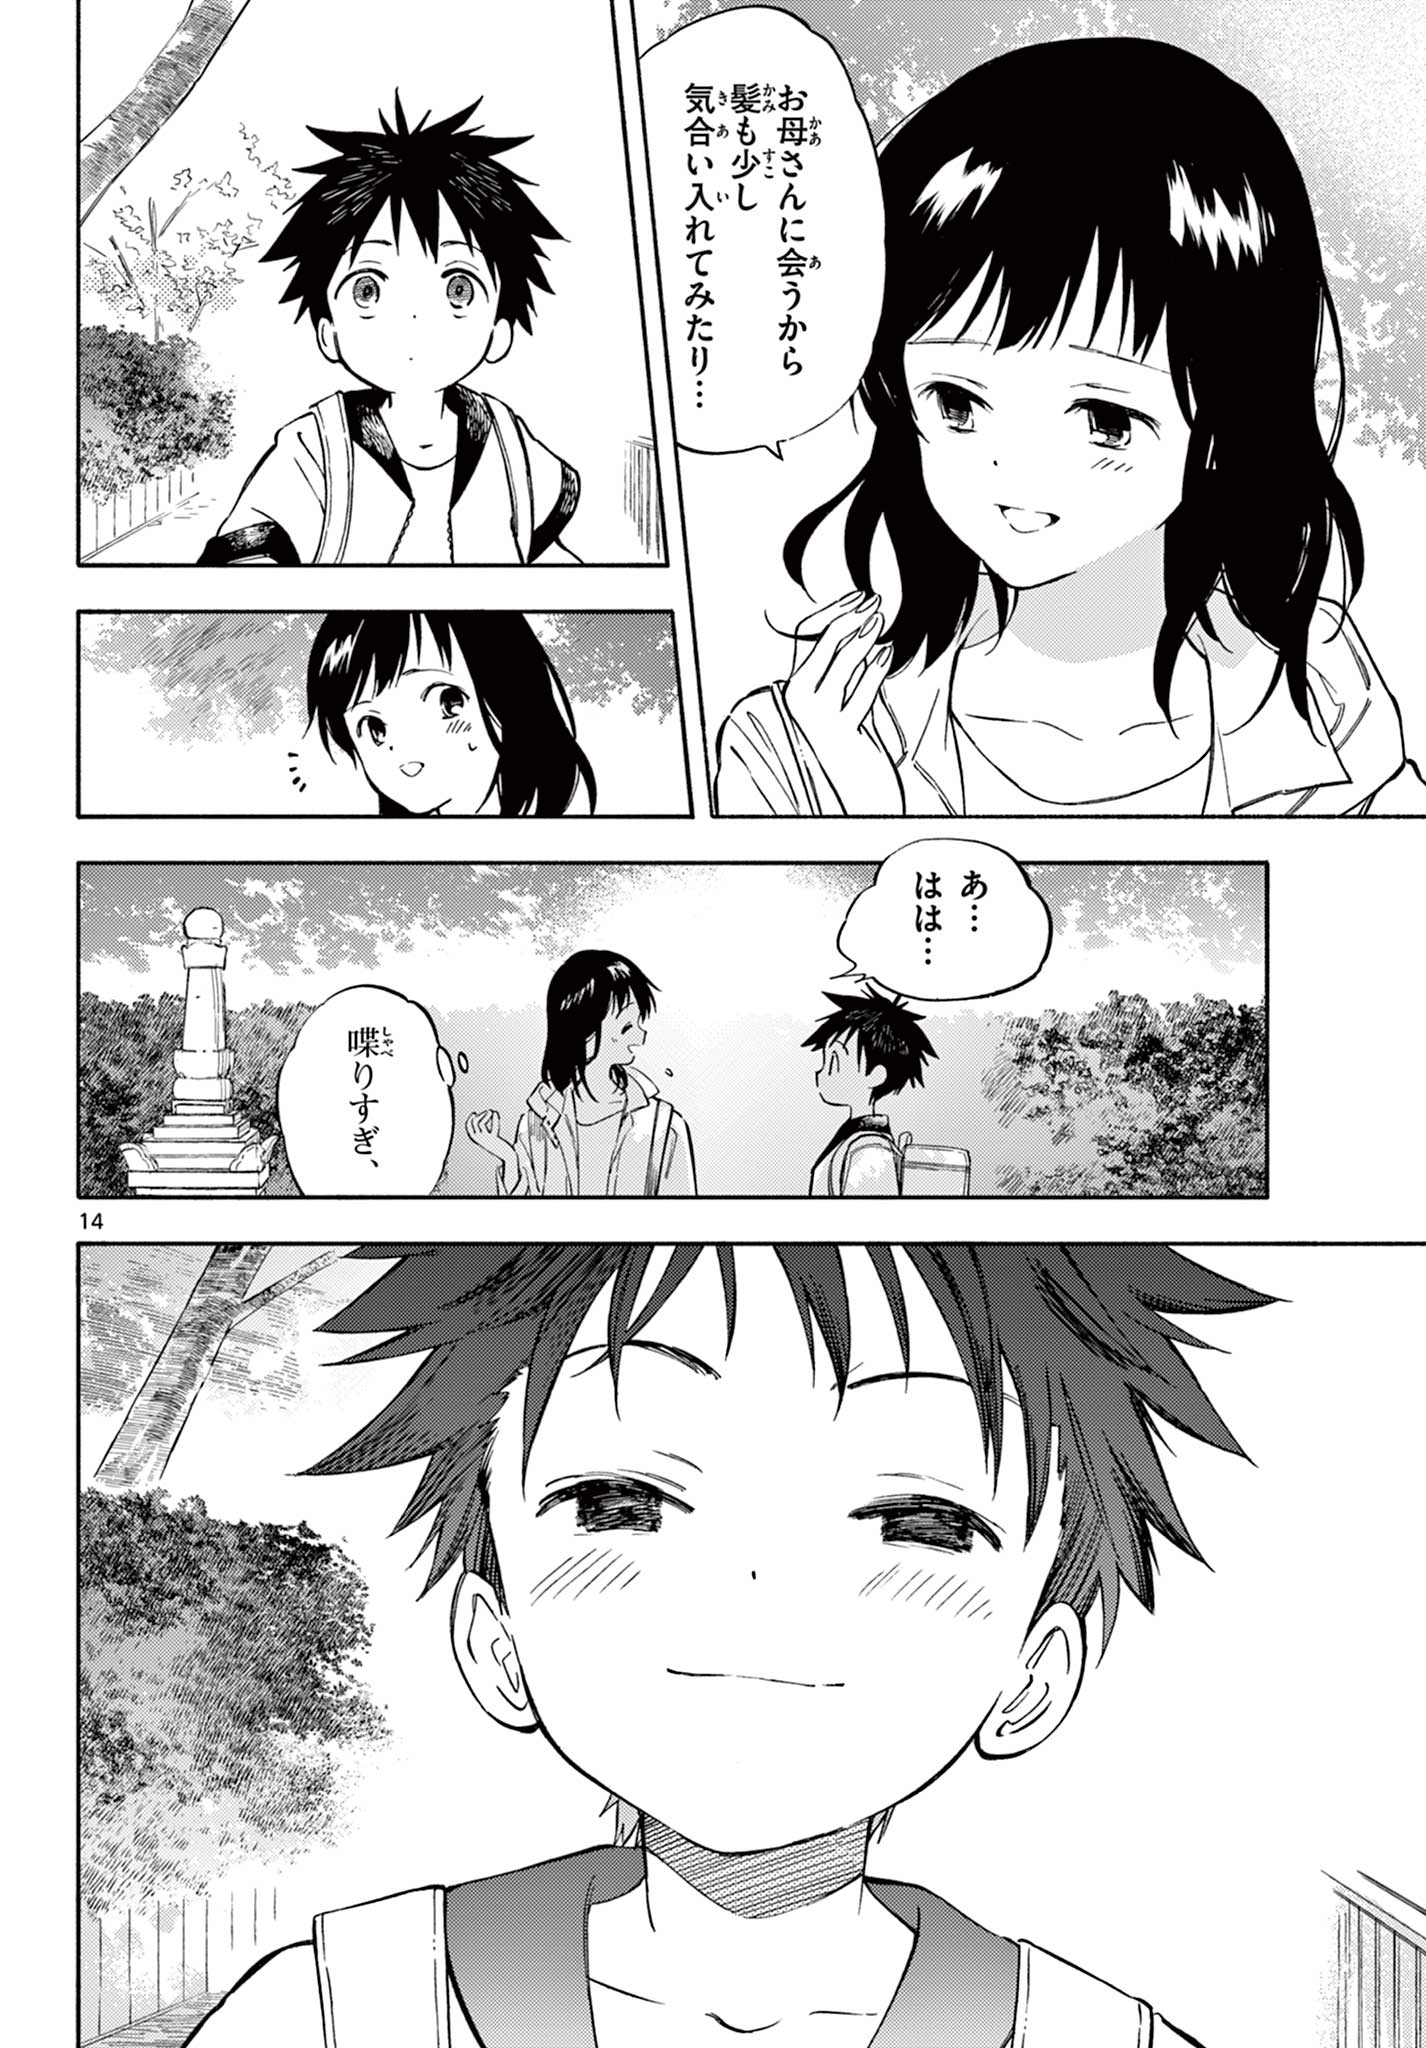 Nami no Shijima no Horizont - Chapter 14.2 - Page 2